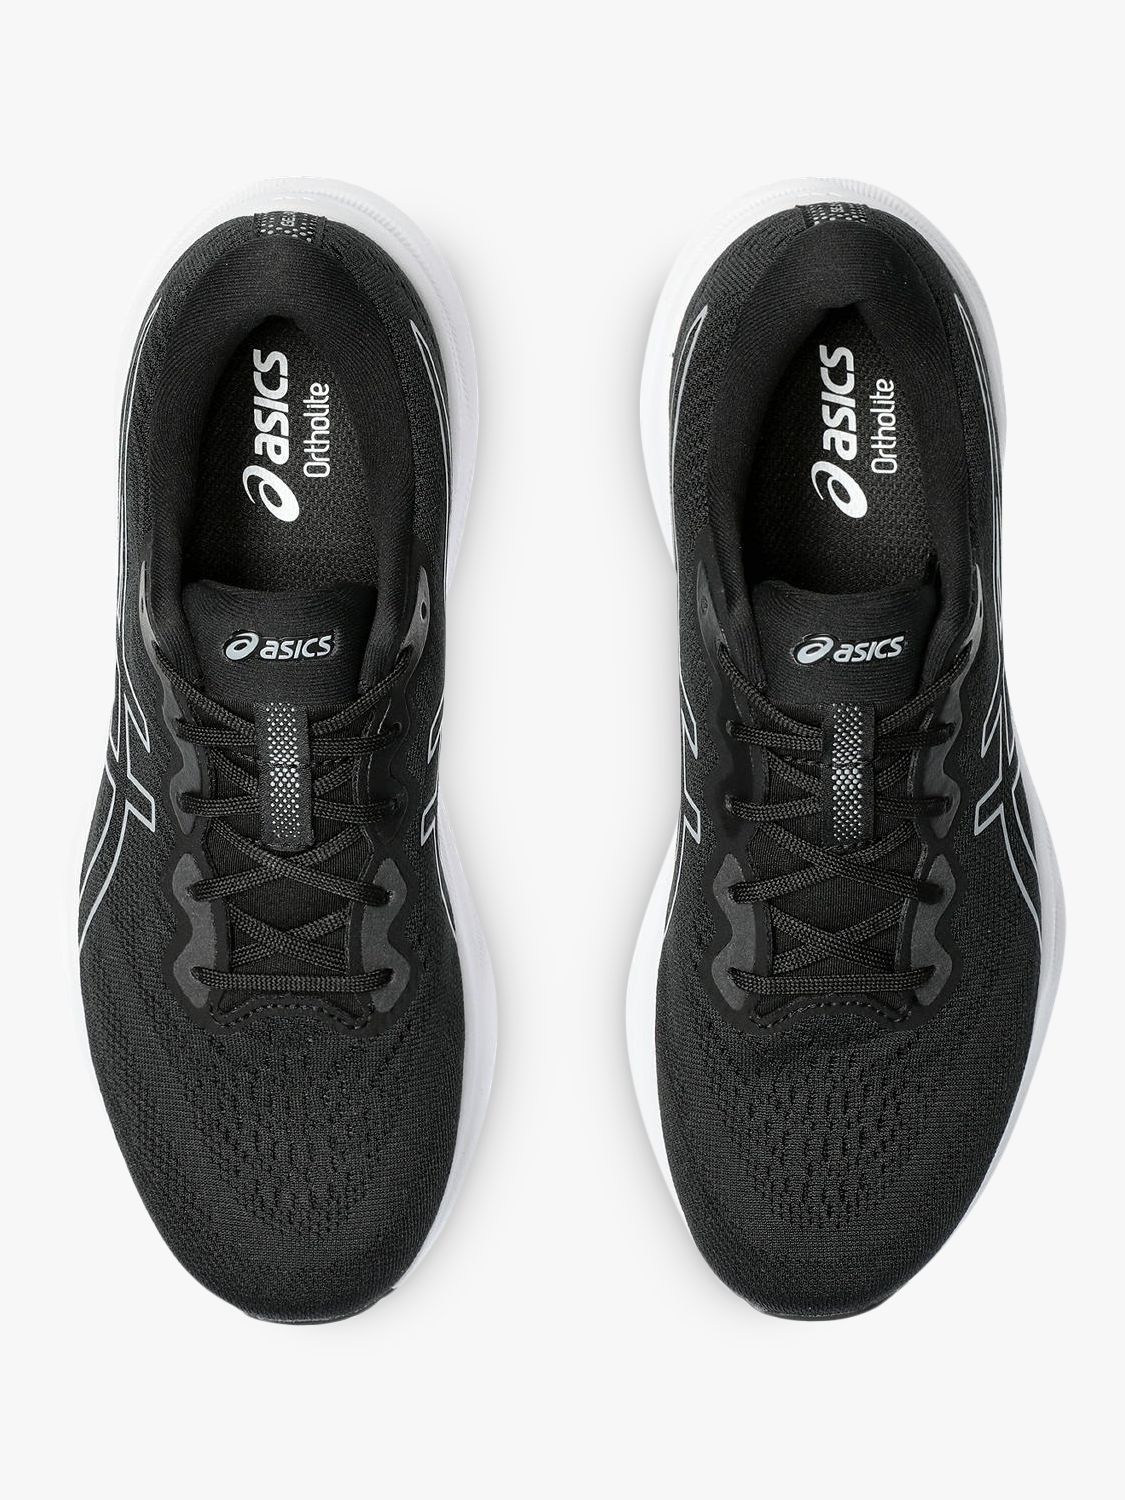 ASICS GEL-PULSE 15 Women's Running Shoes, Black/Sheet Rock, 4